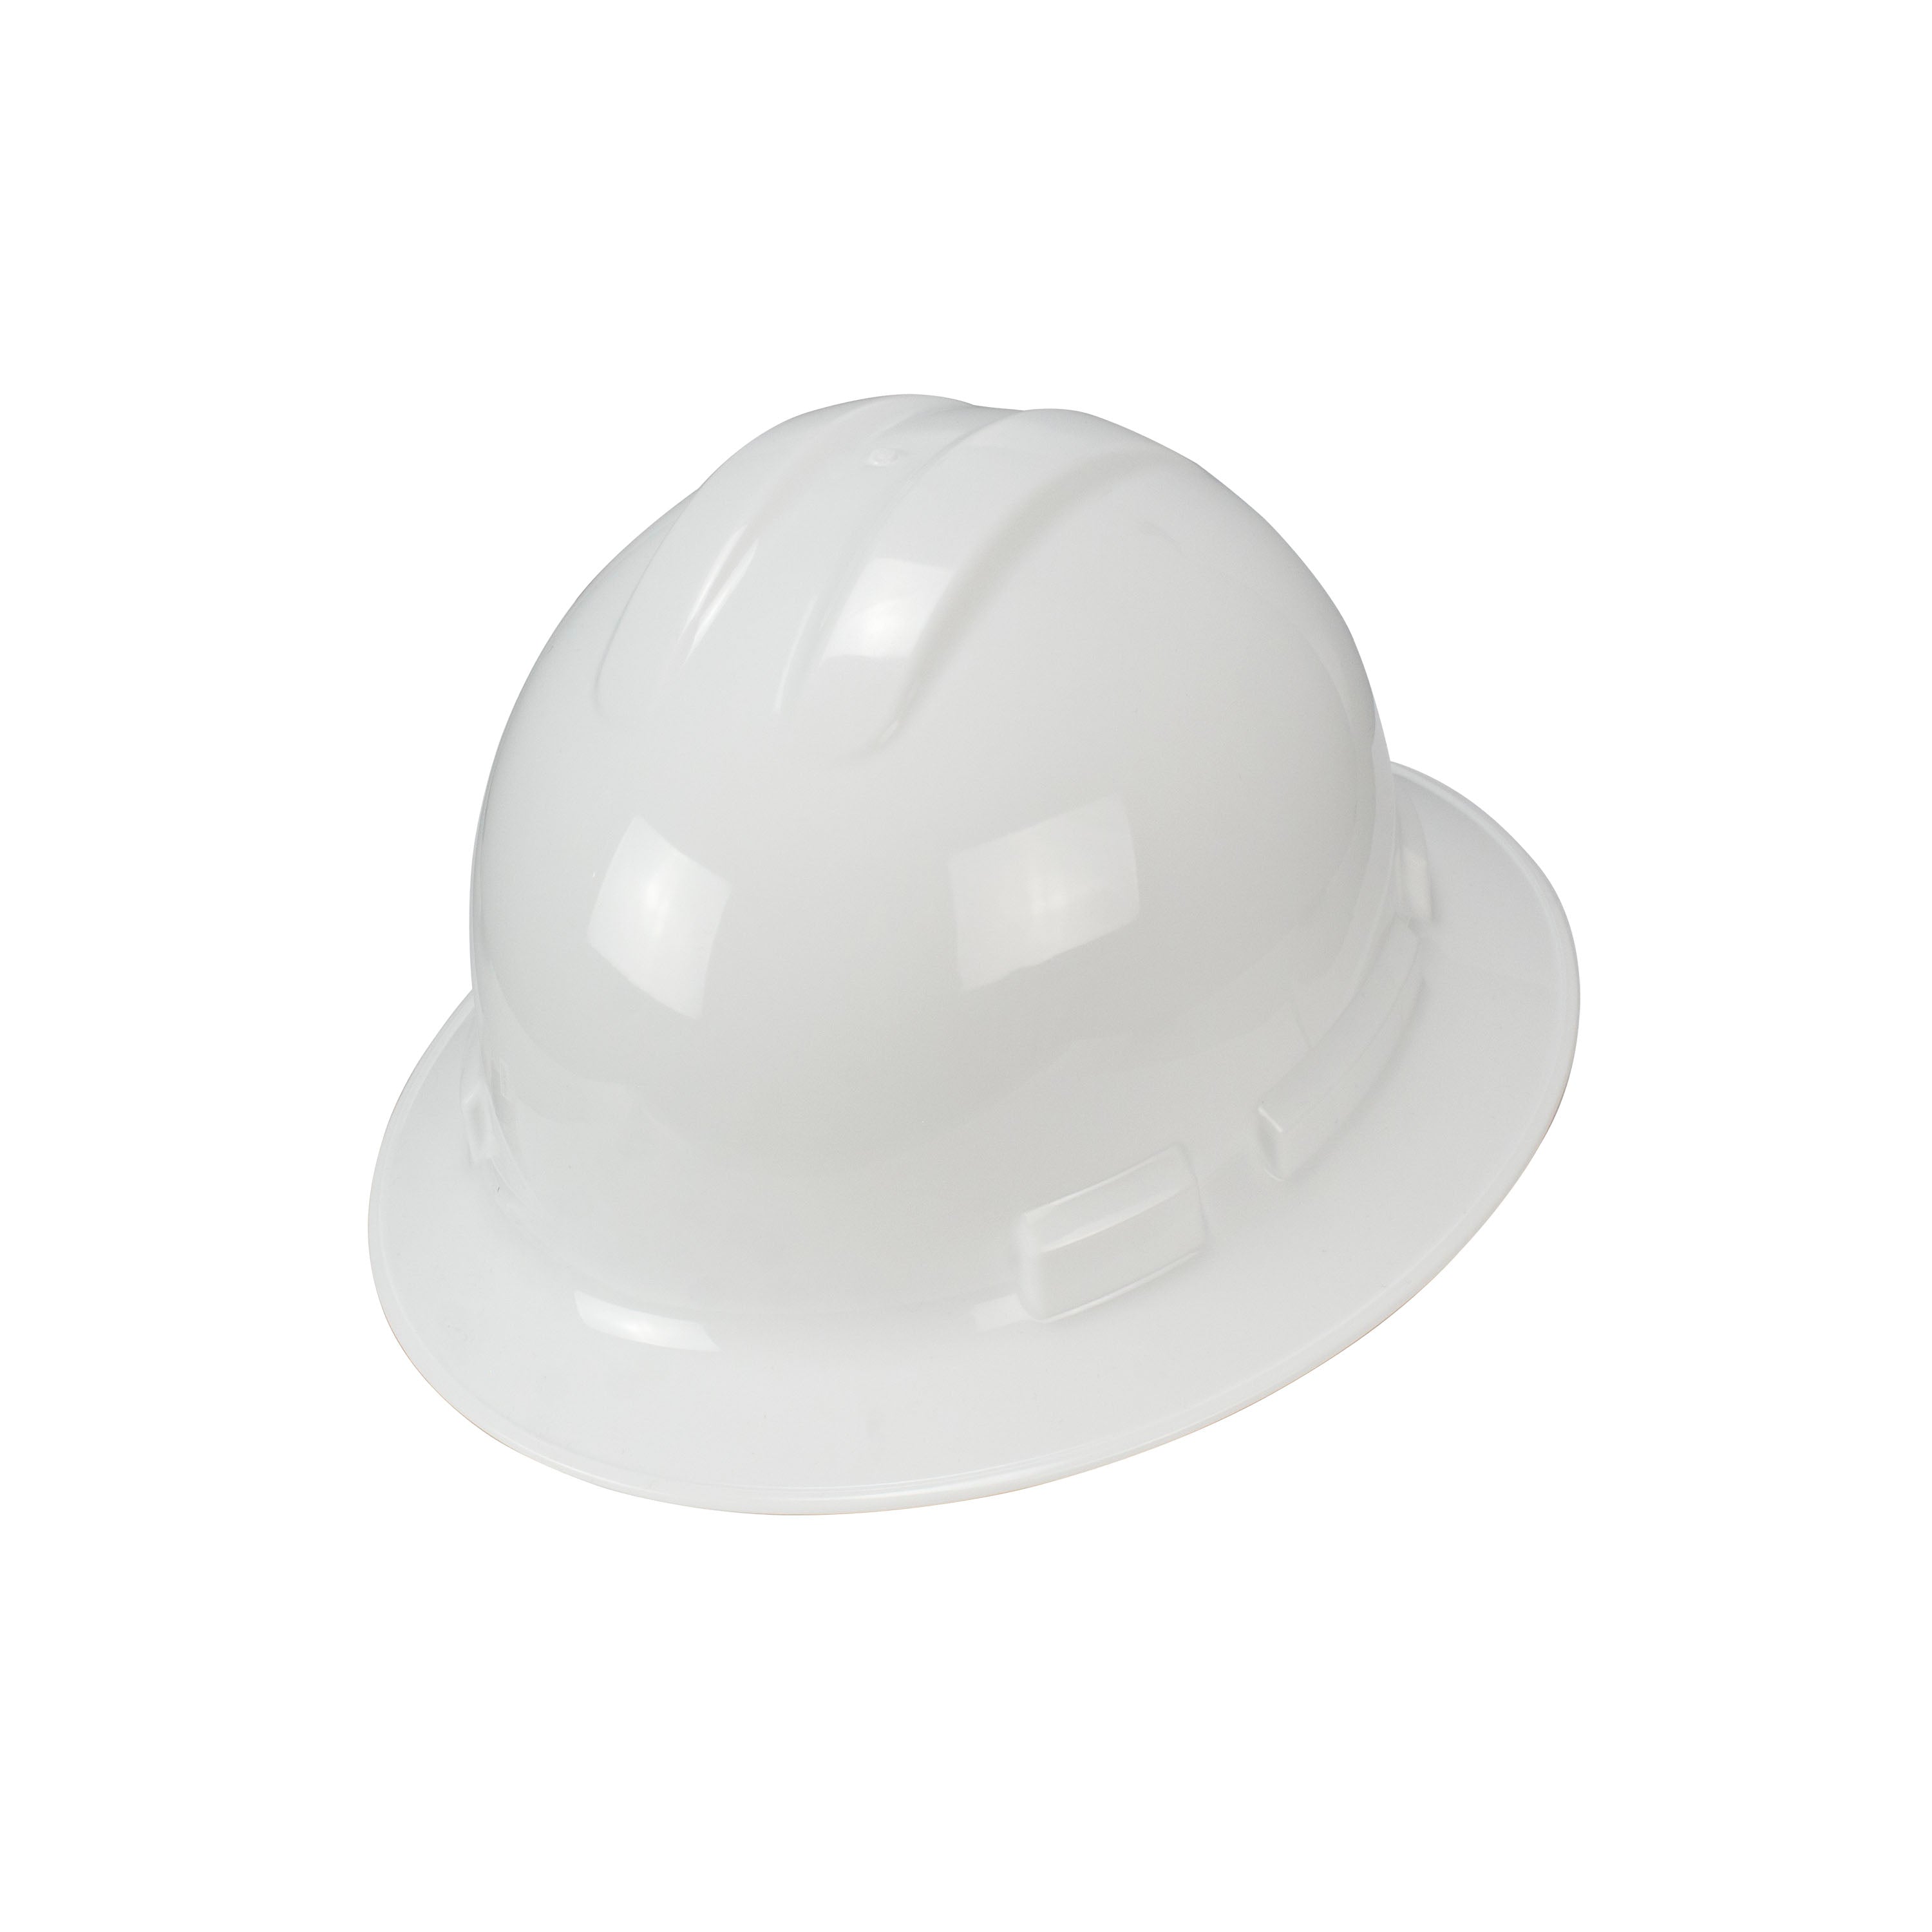 DEWALT DPG11FB Full Brim Hard Hat - White